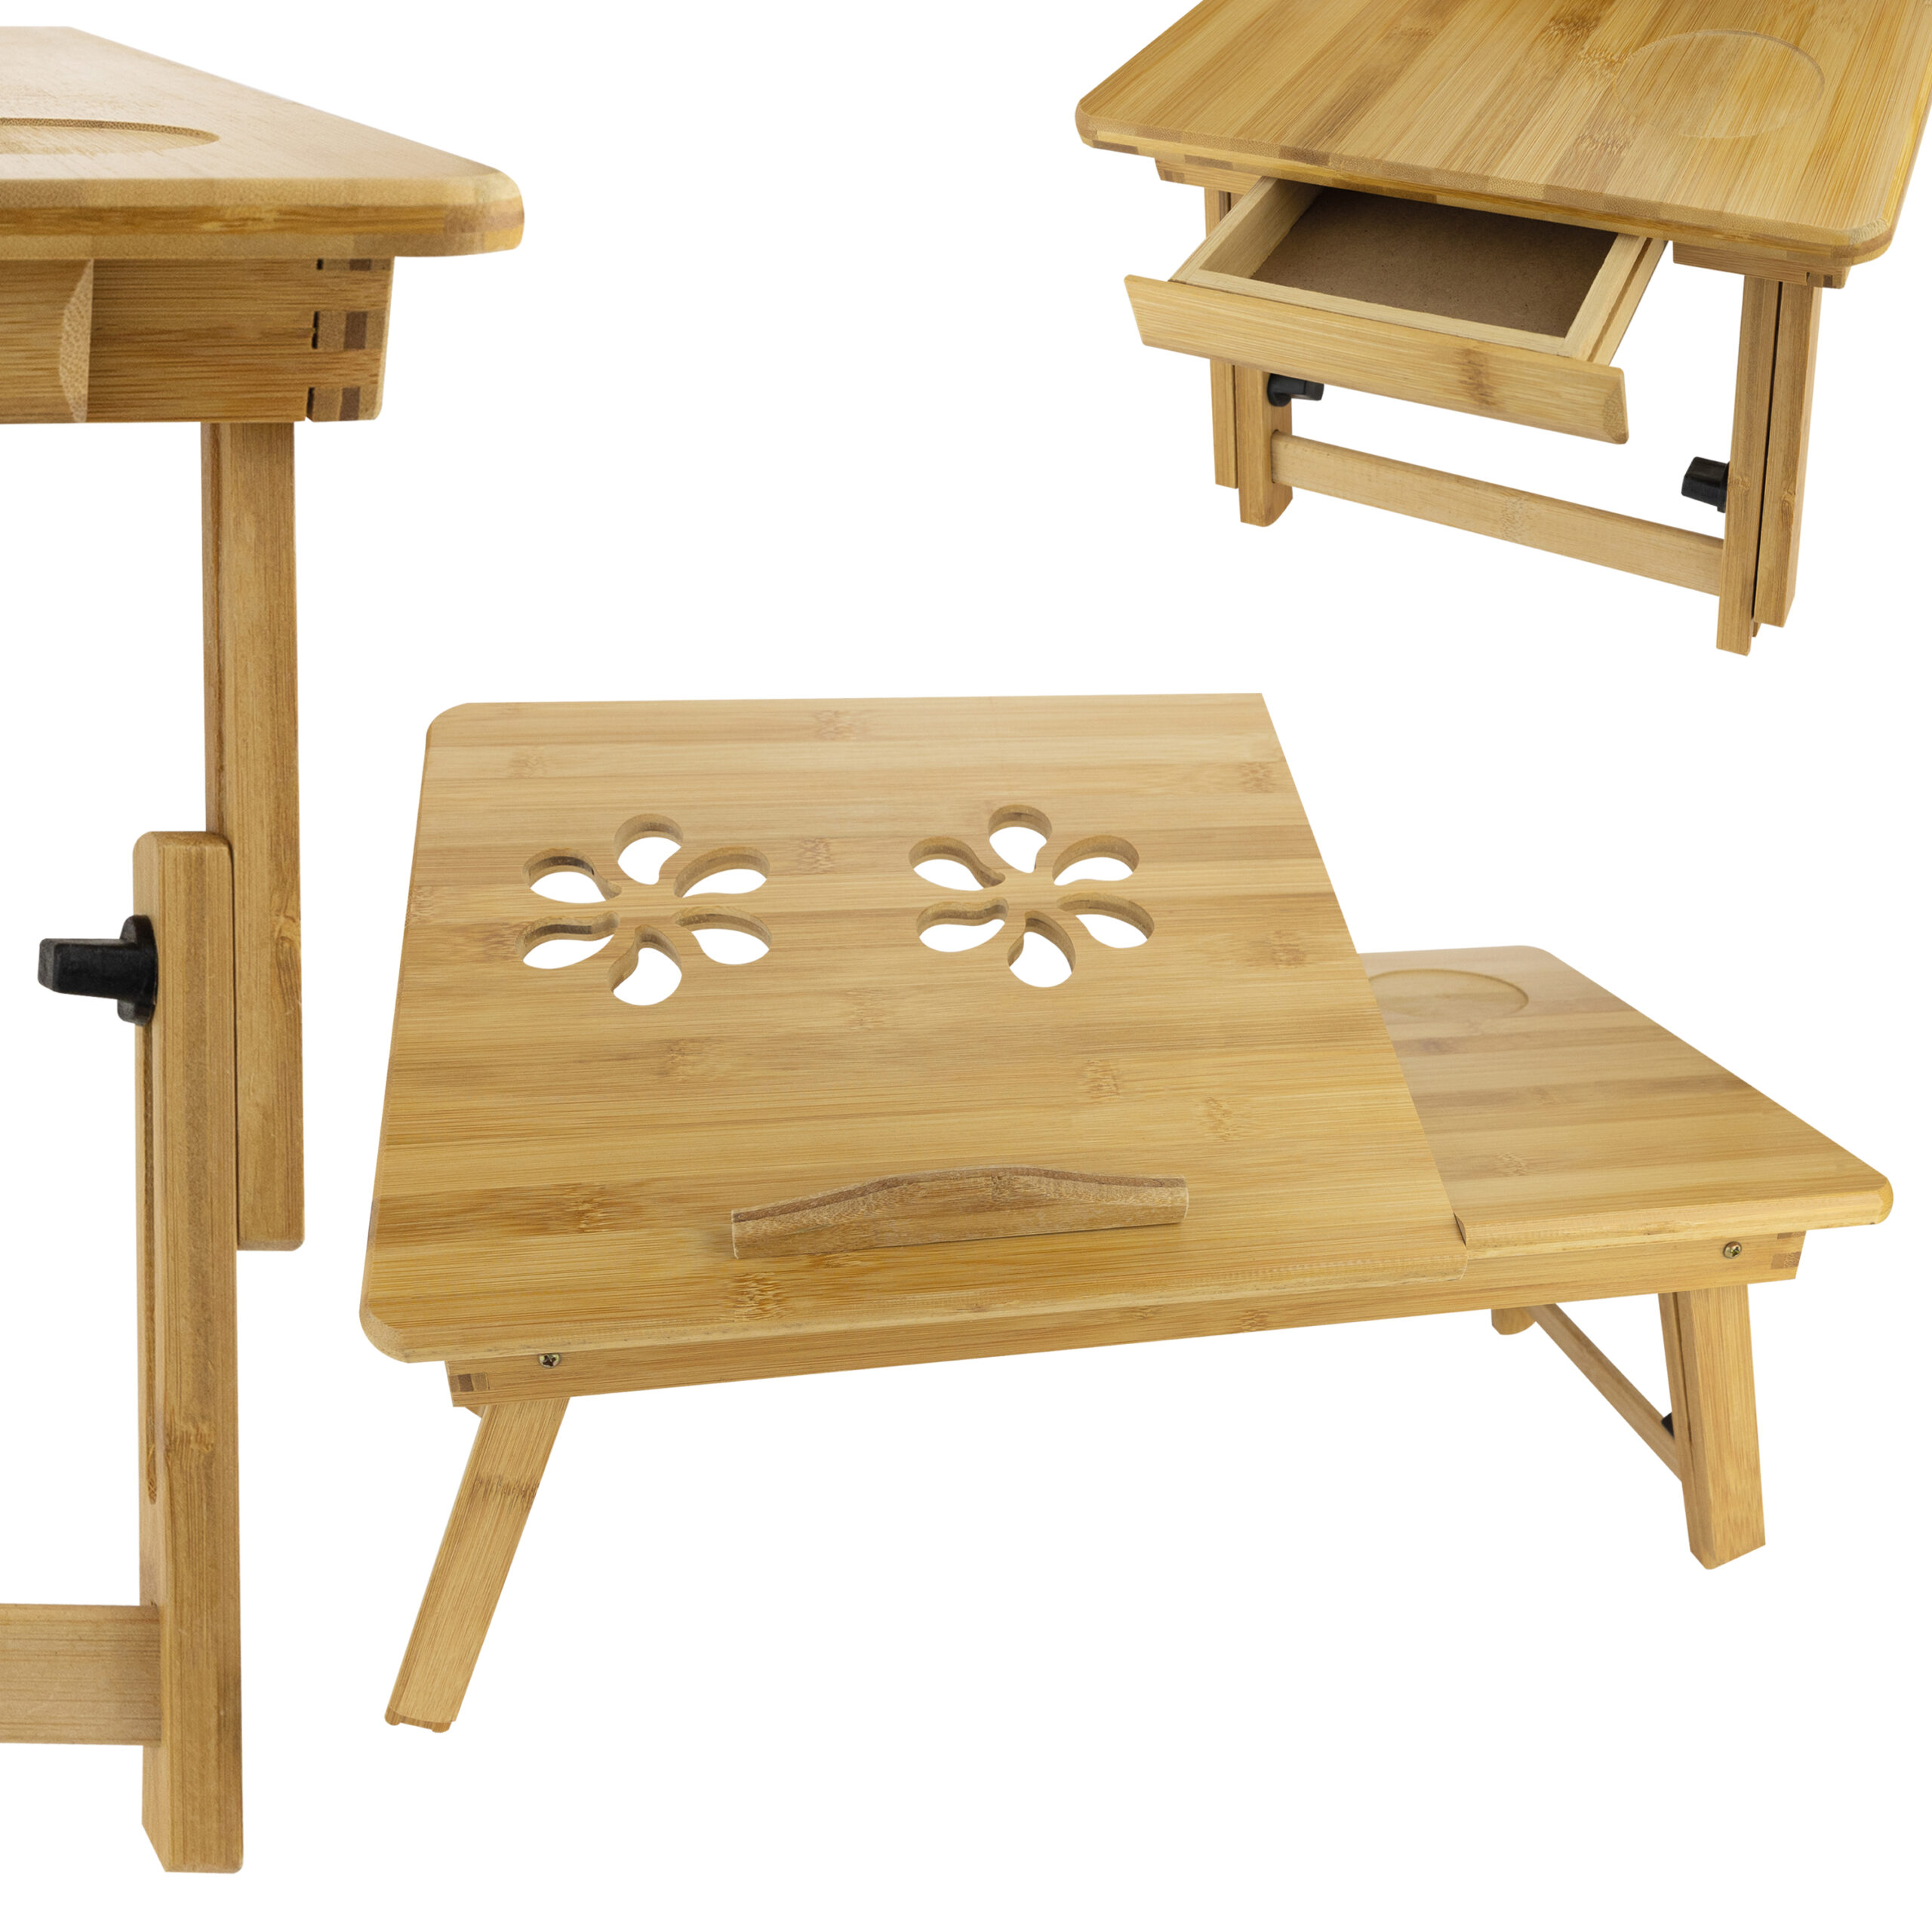 Drewniany składany stolik pod laptopa 7454_11